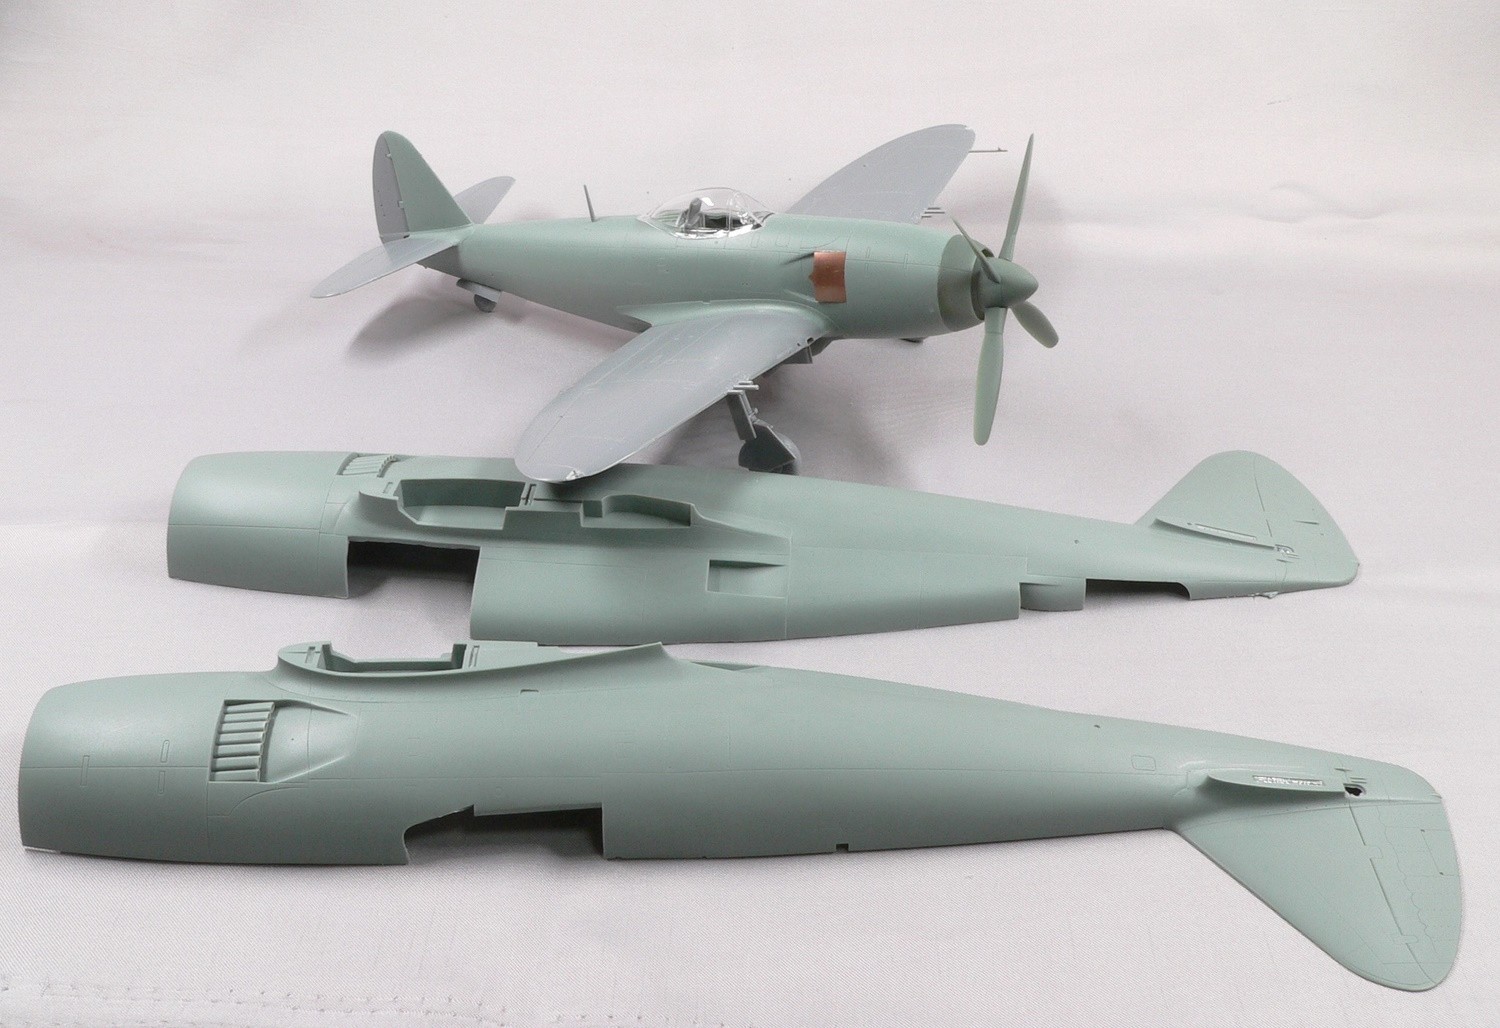 Halberd Models XP-72 Ultrabolt 1/32 or 1/48